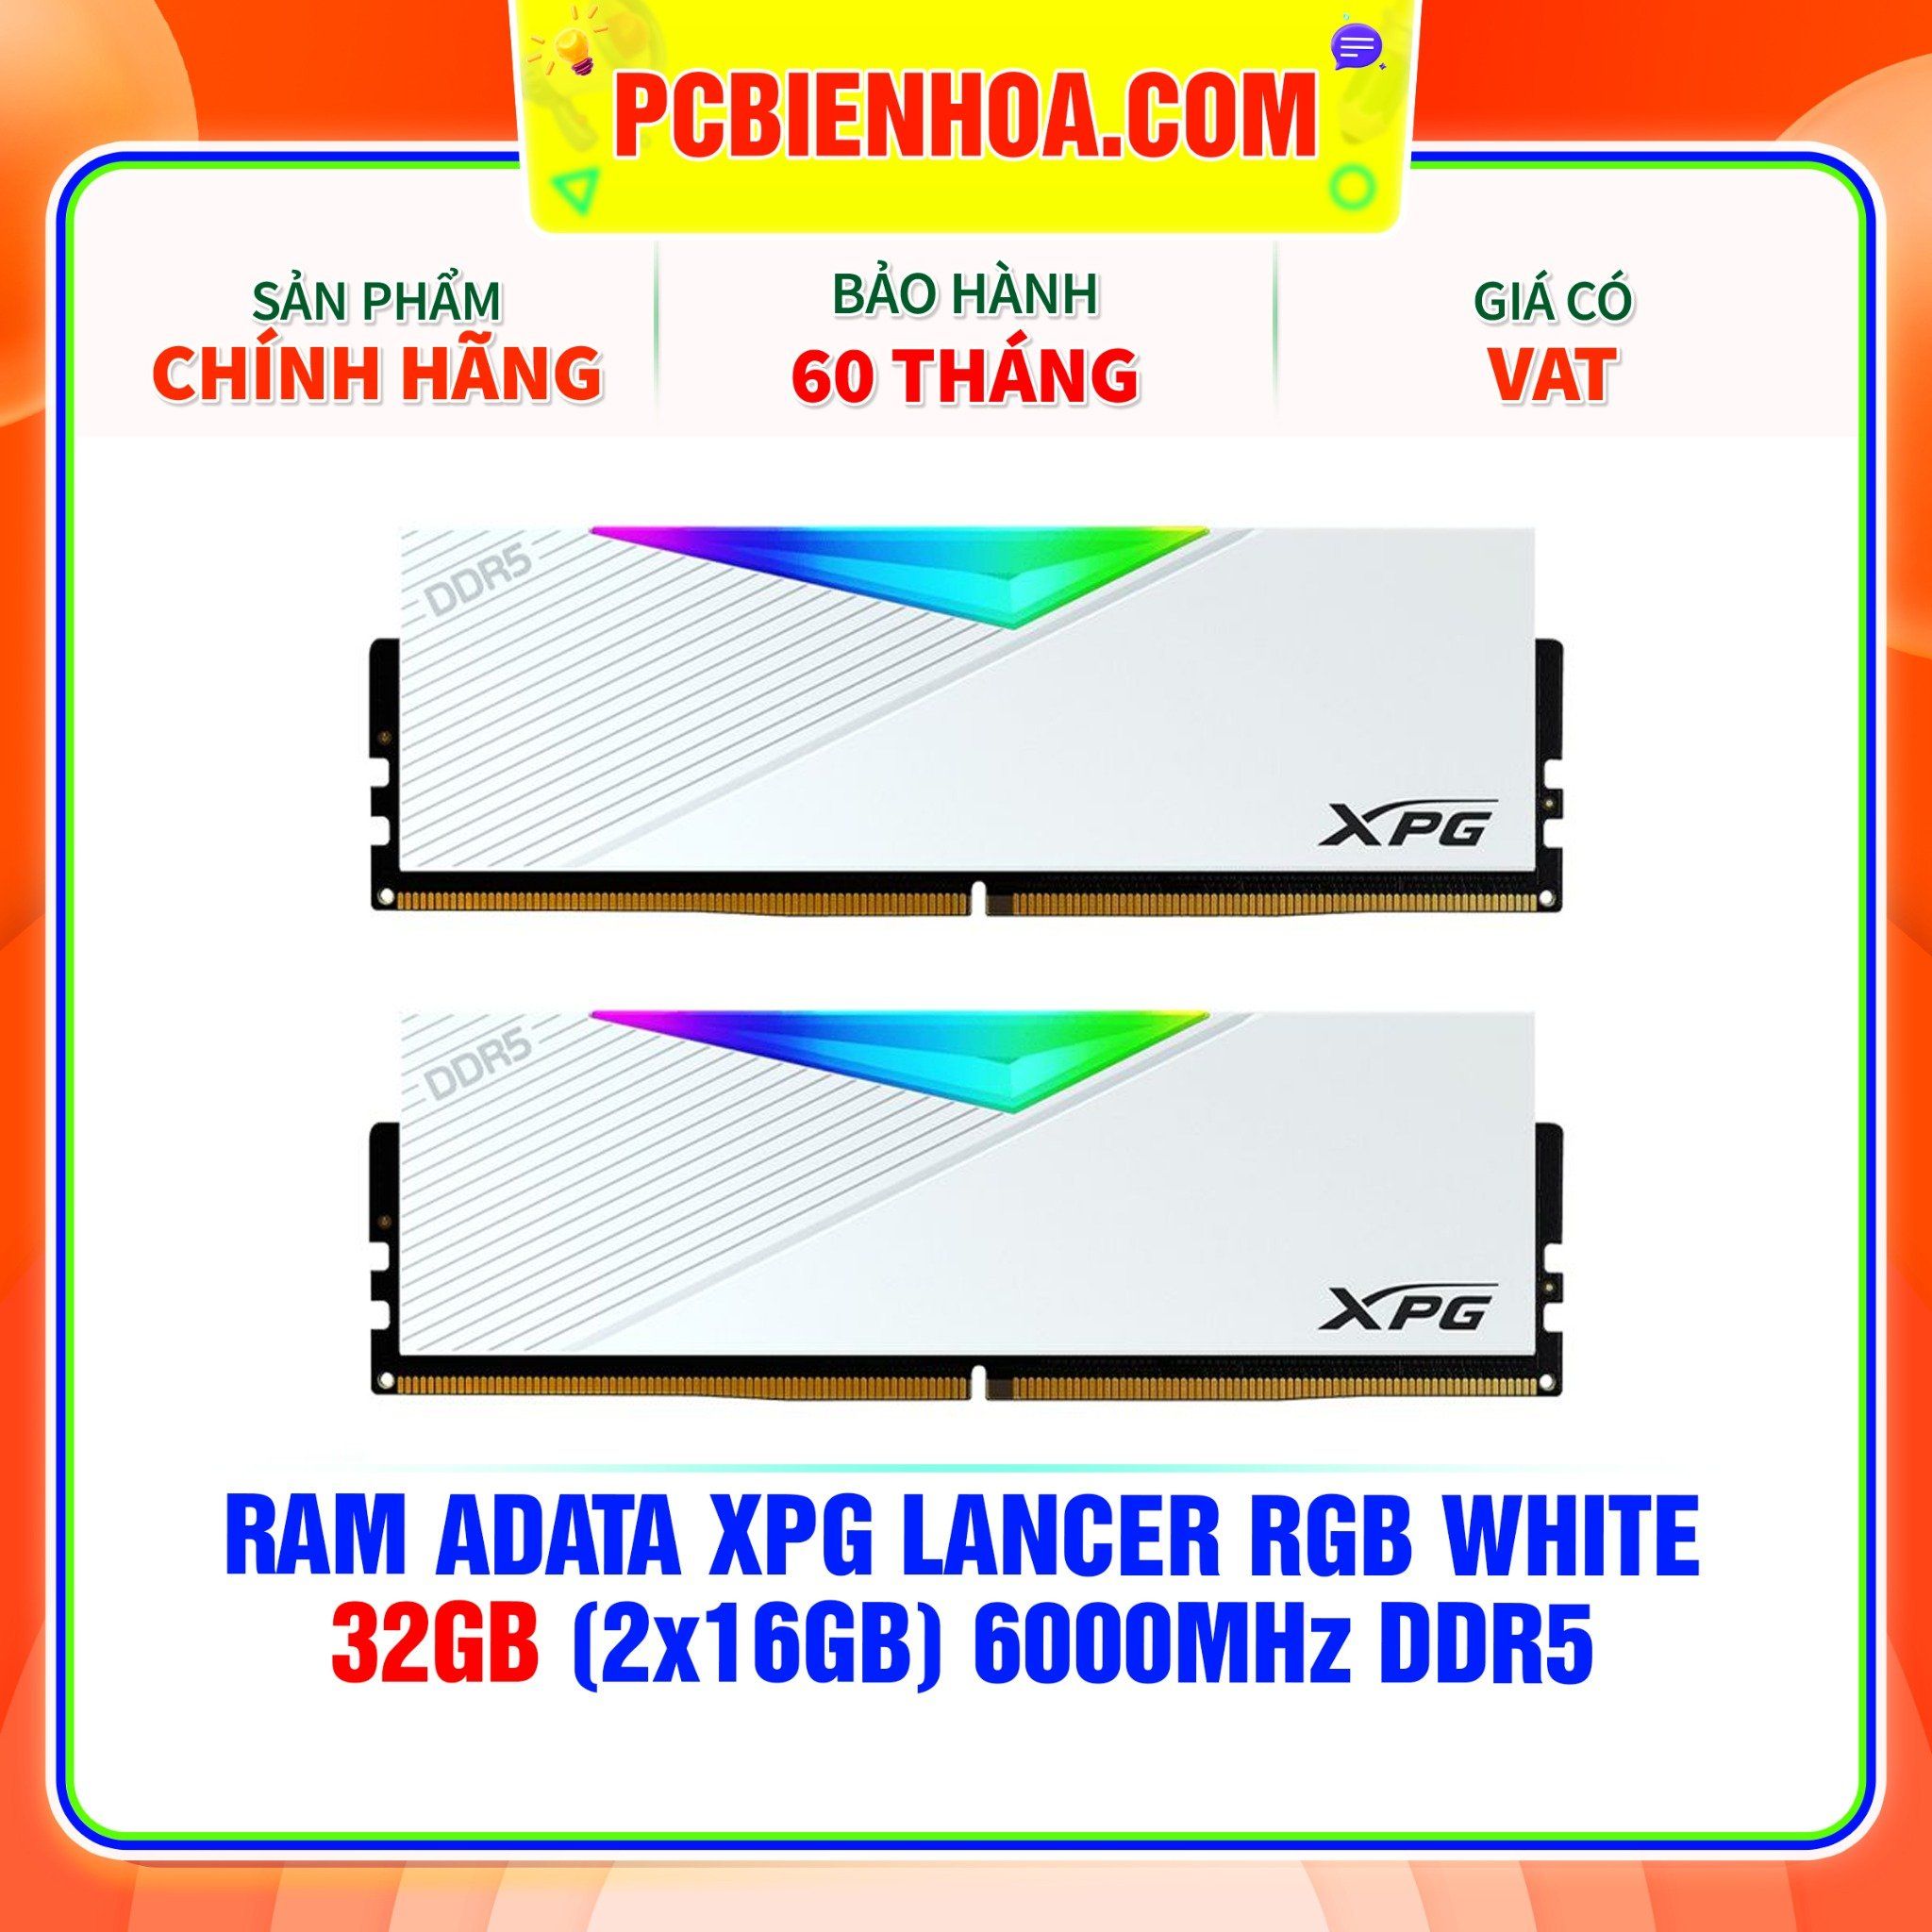  RAM ADATA XPG LANCER RGB WHITE - 32GB (2x16GB) 6000MHz DDR5 